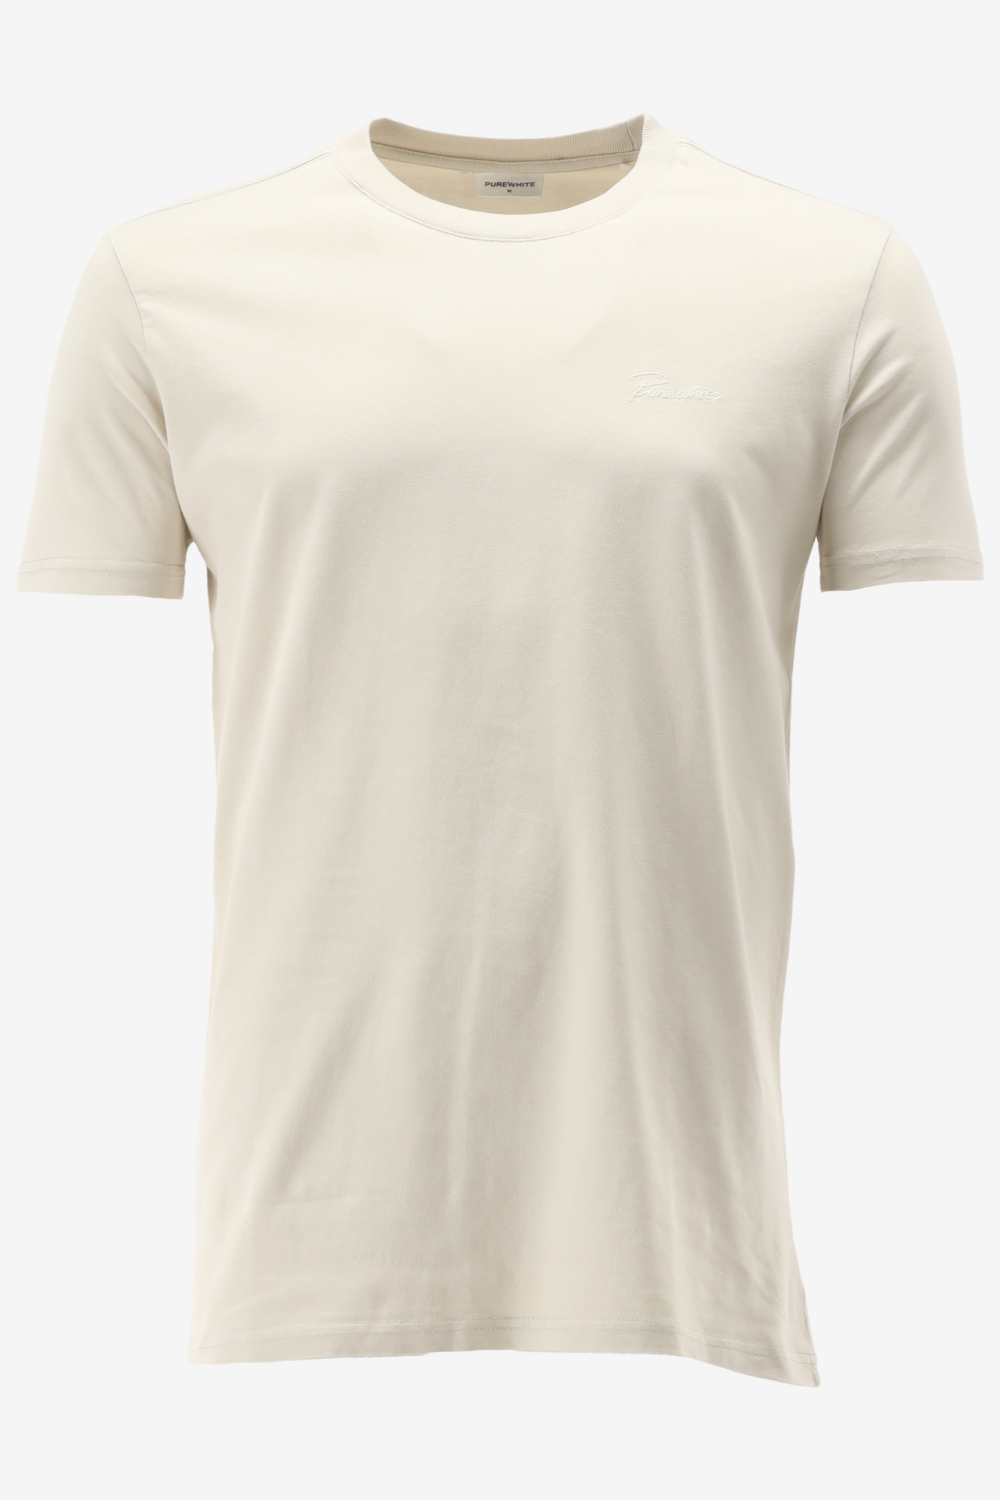 Purewhite T shirt